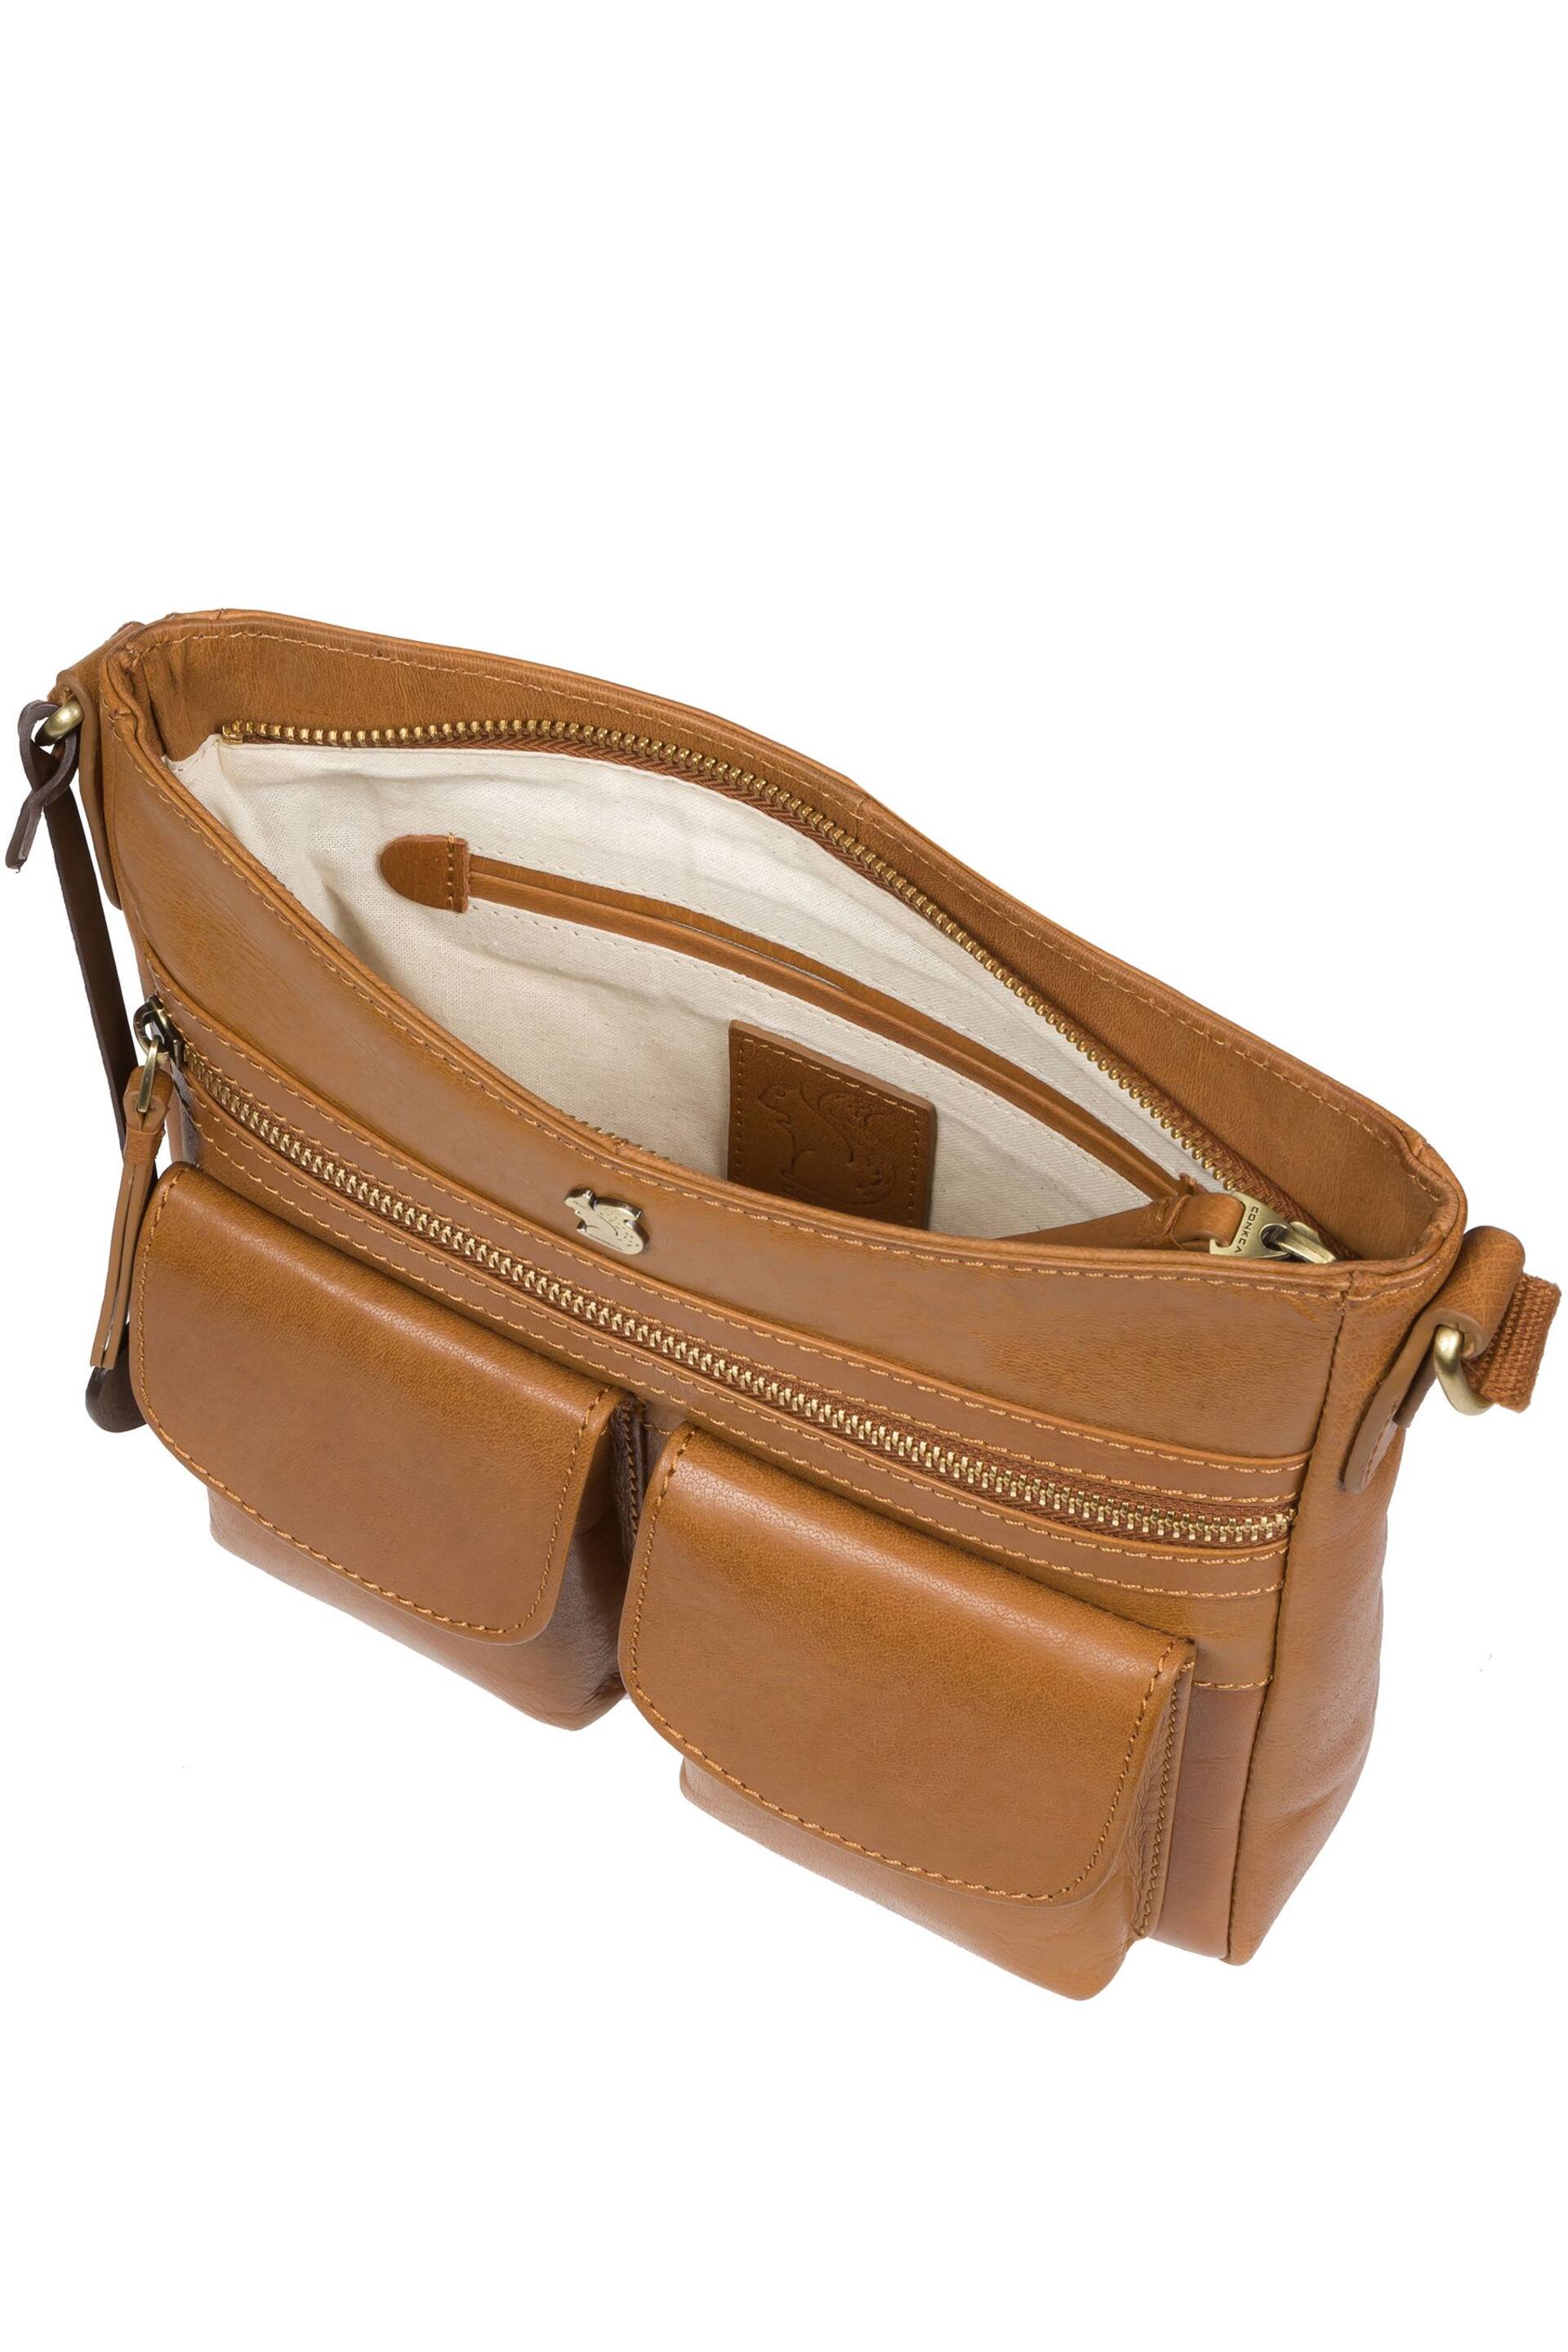 Conkca Baby Bon Leather Cross-Body Bag - Image 4 of 6